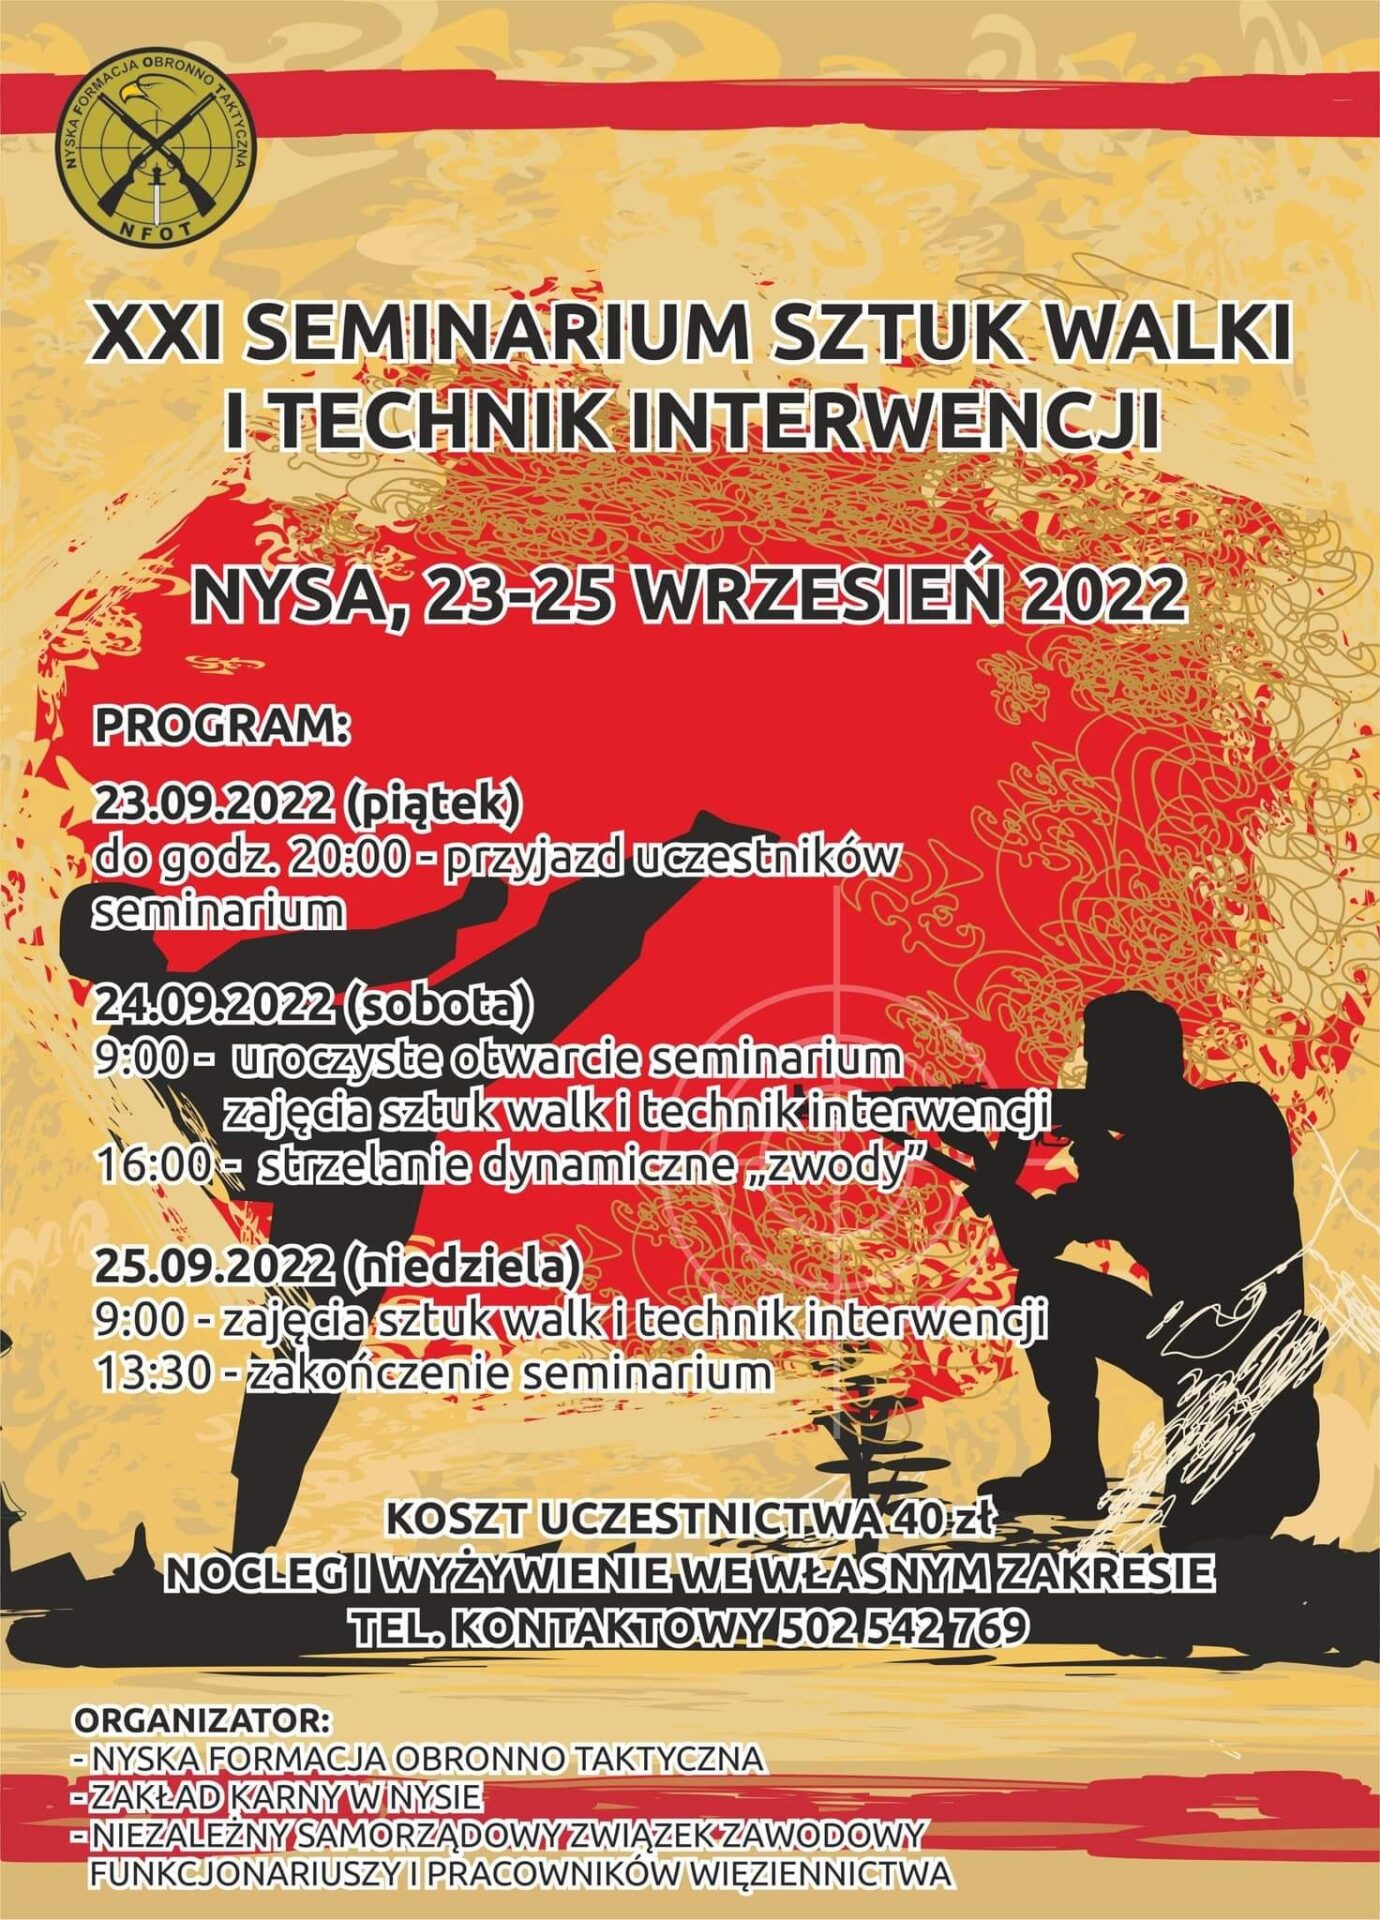 XXI Midzynarodowe Seminarium Sztuk Walki